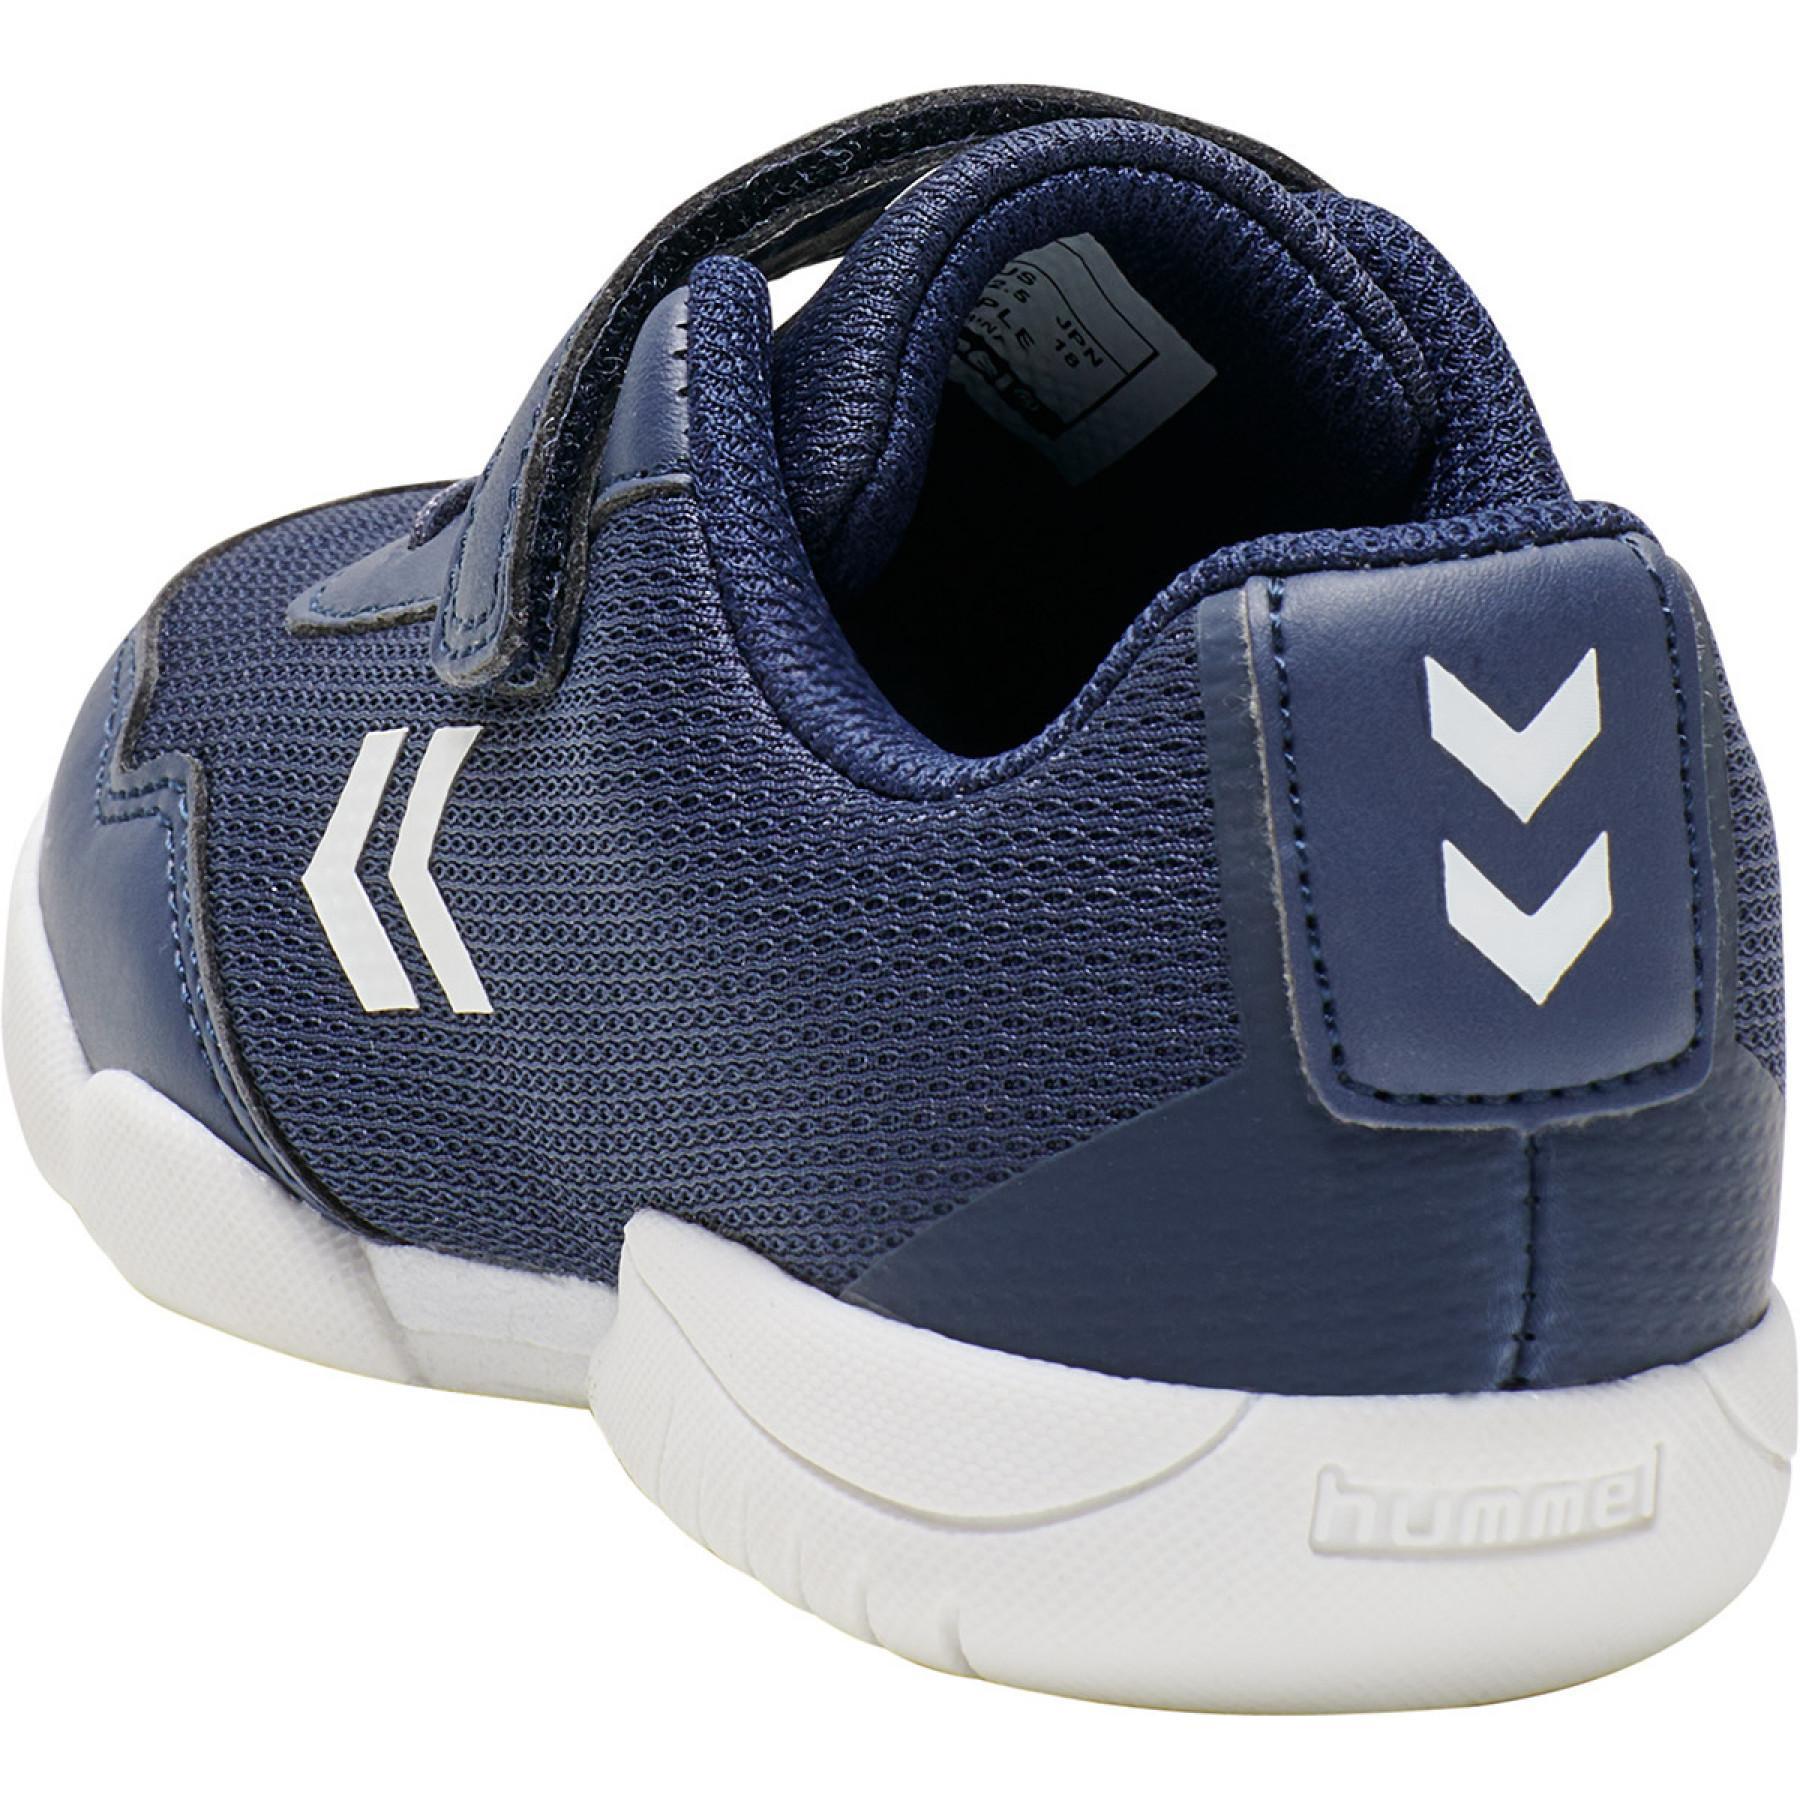 Junior sneakers Hummel Aero Team Vc